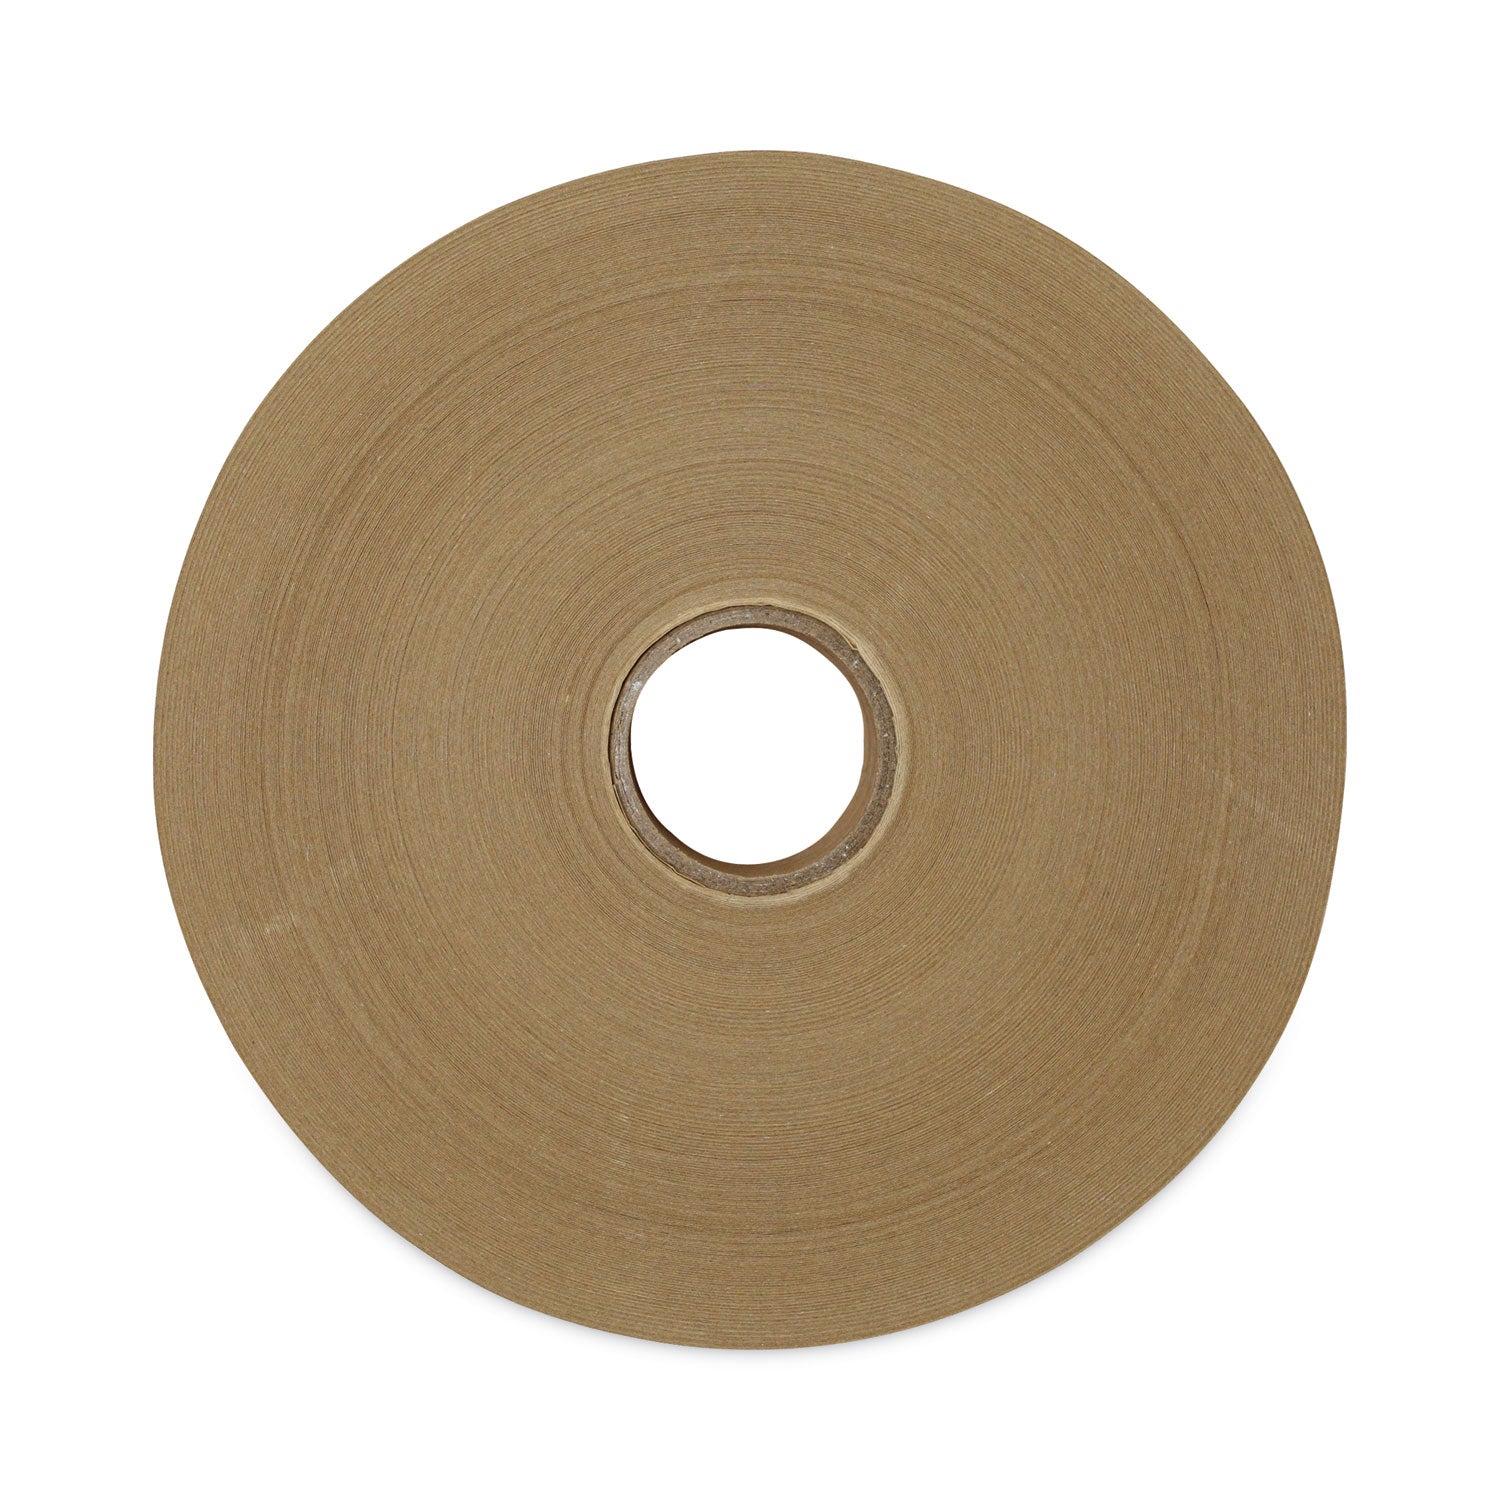 gummed-kraft-sealing-tape-3-core-2-x-600-ft-brown-12-carton_unv2163 - 6